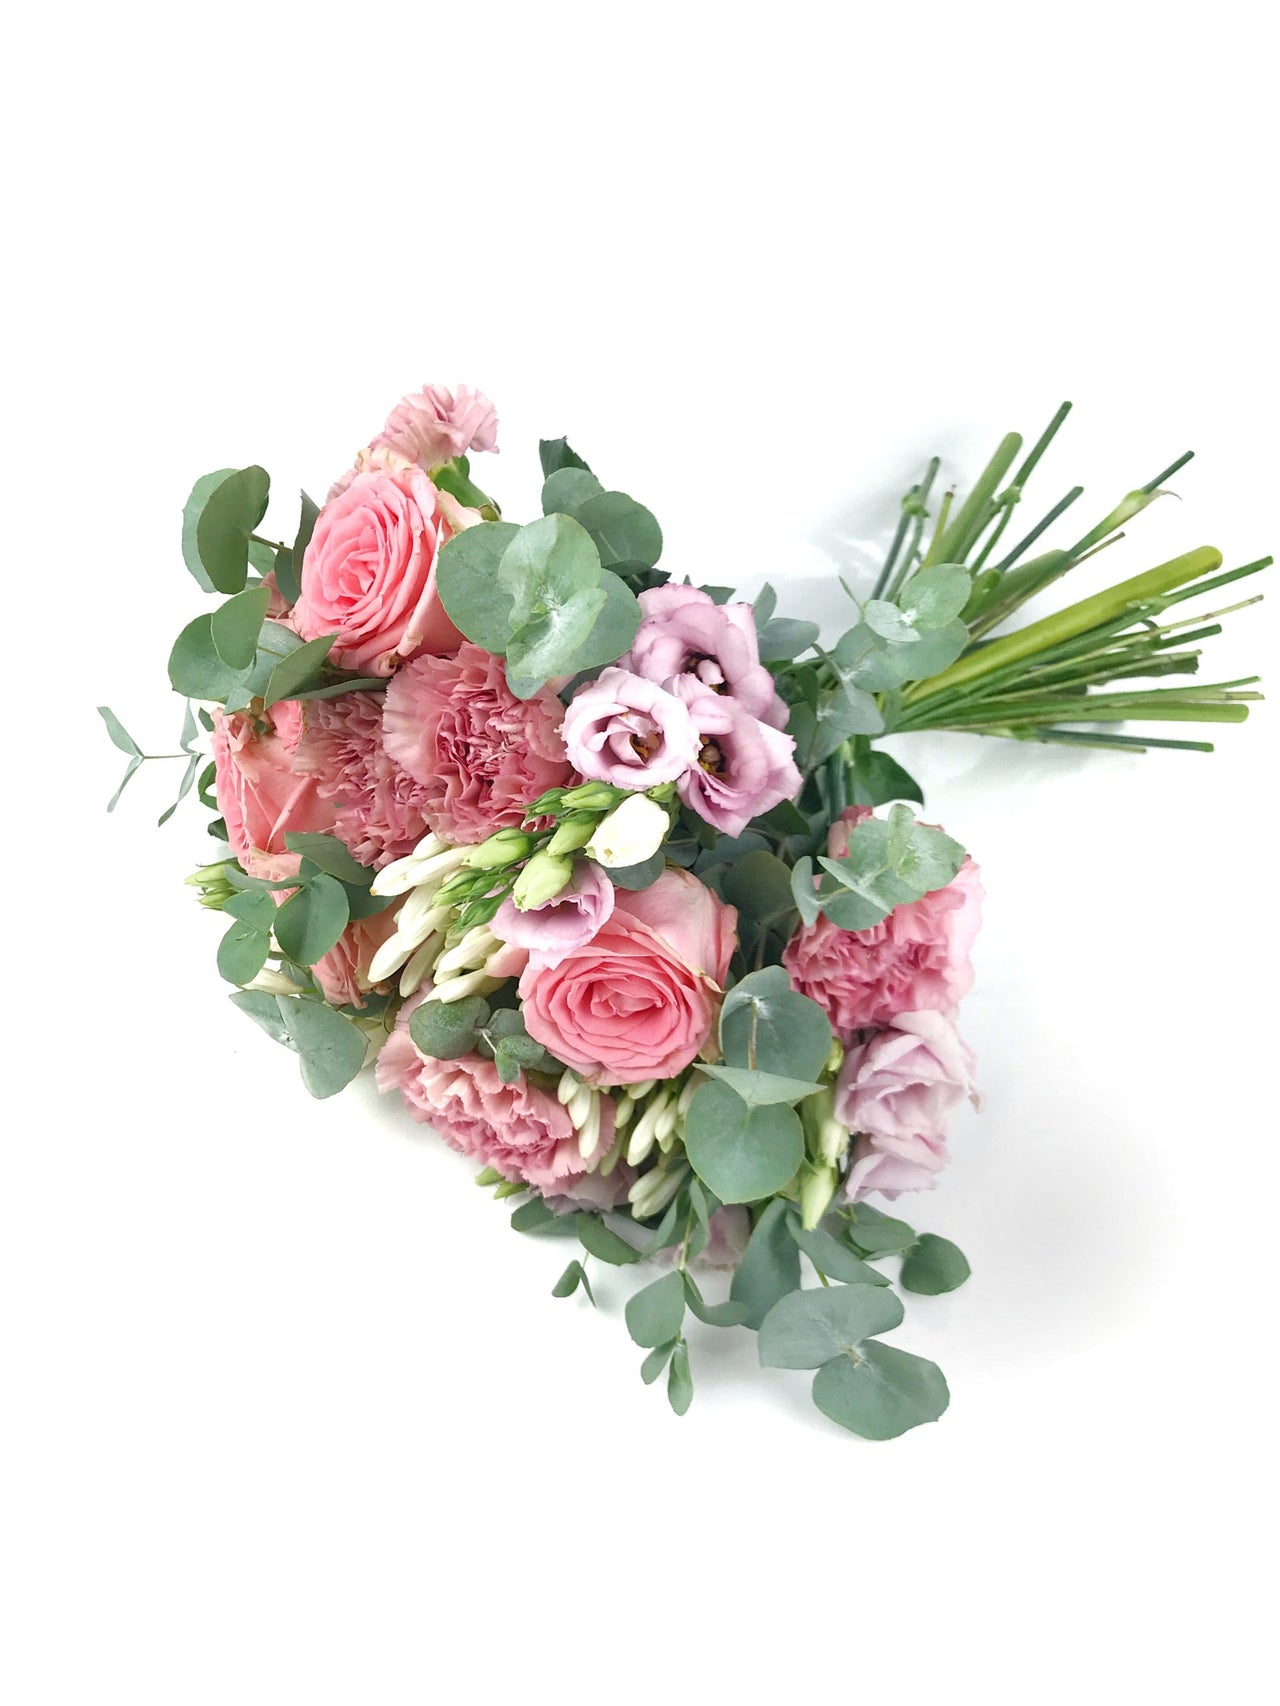 Sending flowers for birthday - Large pink 